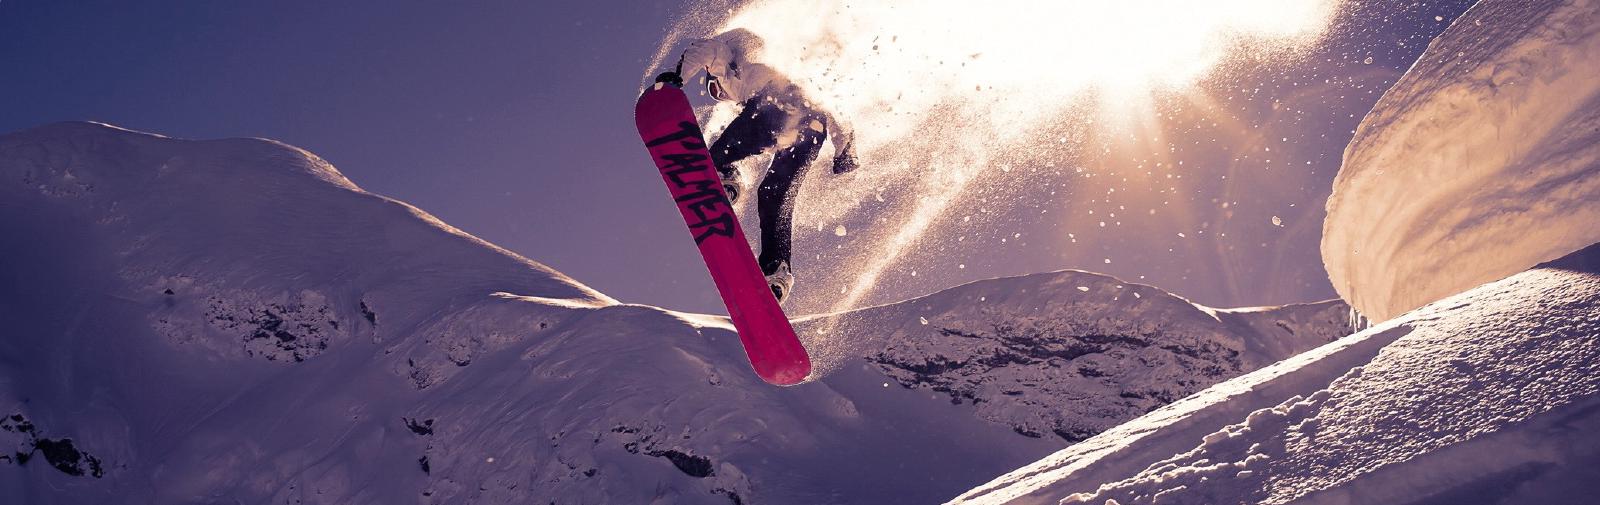 Snowboarding trick jump snow.